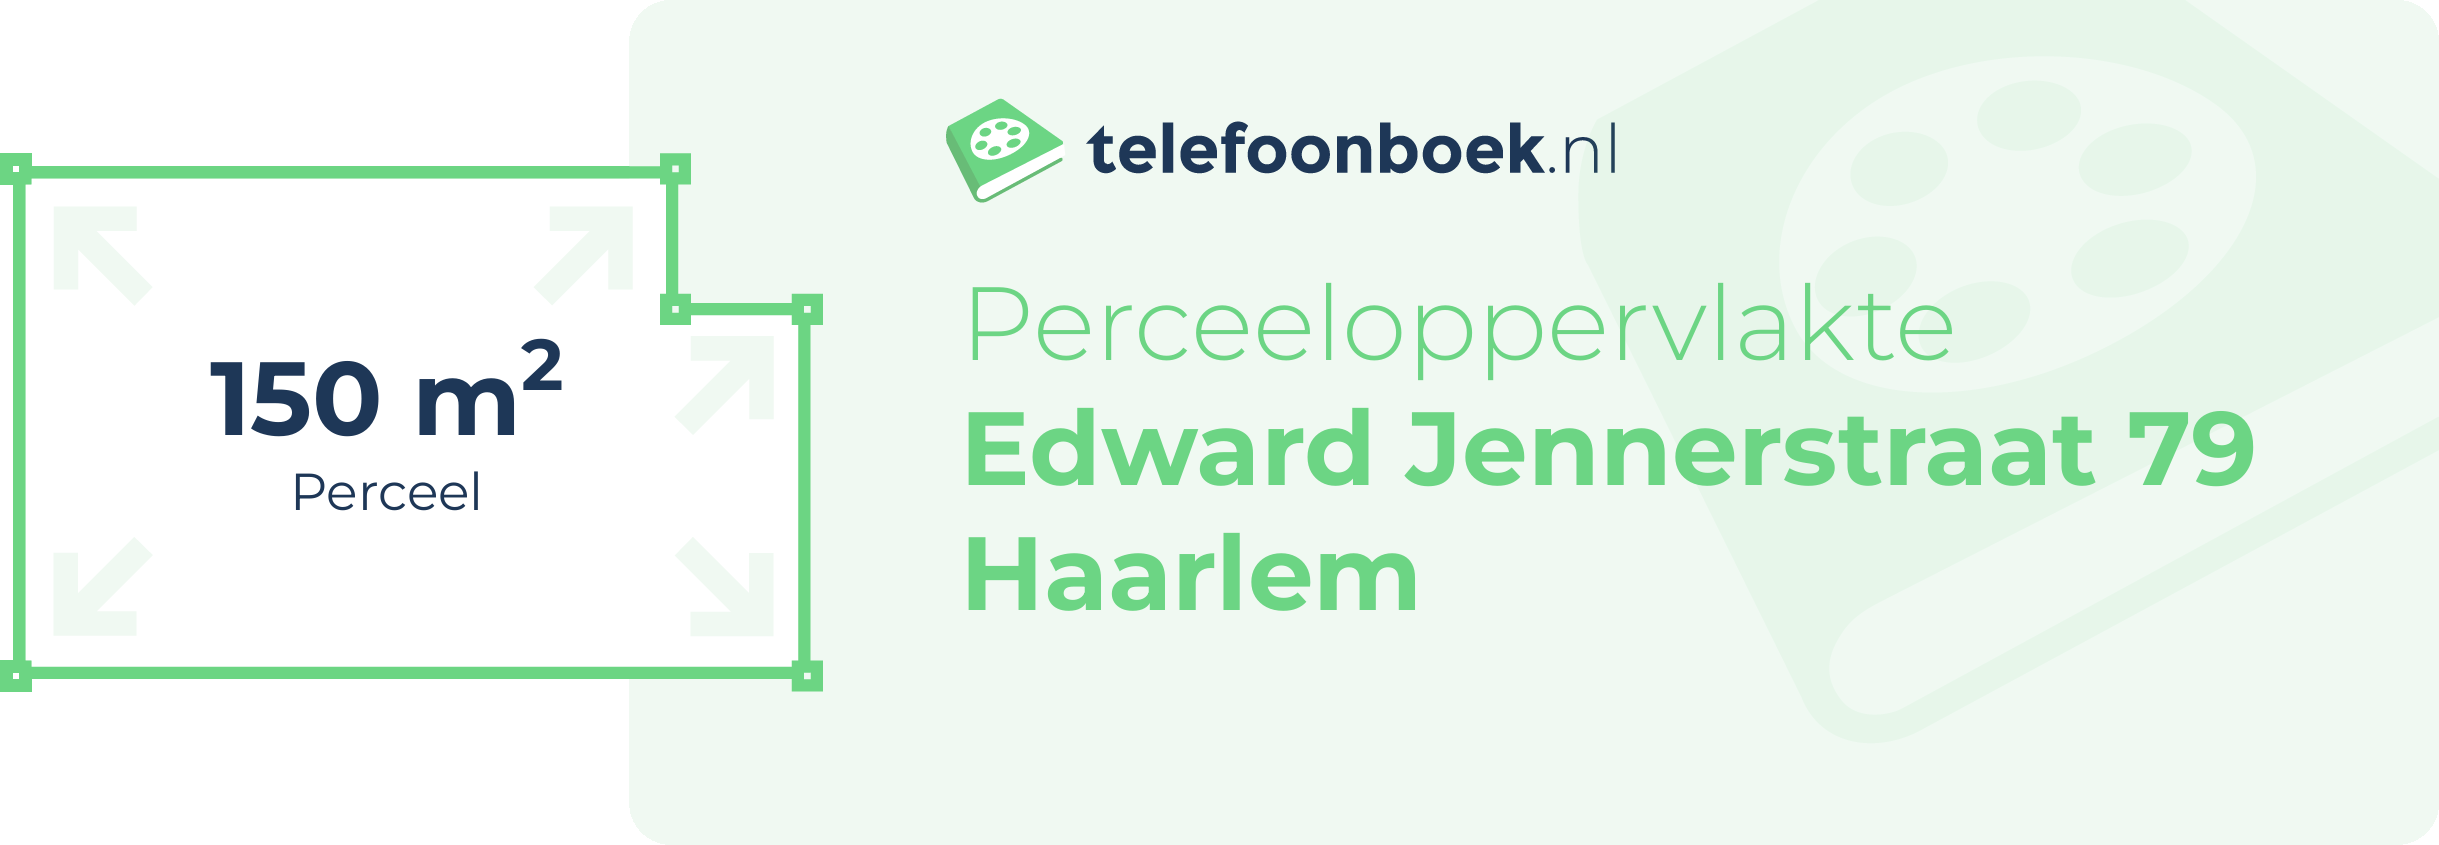 Perceeloppervlakte Edward Jennerstraat 79 Haarlem